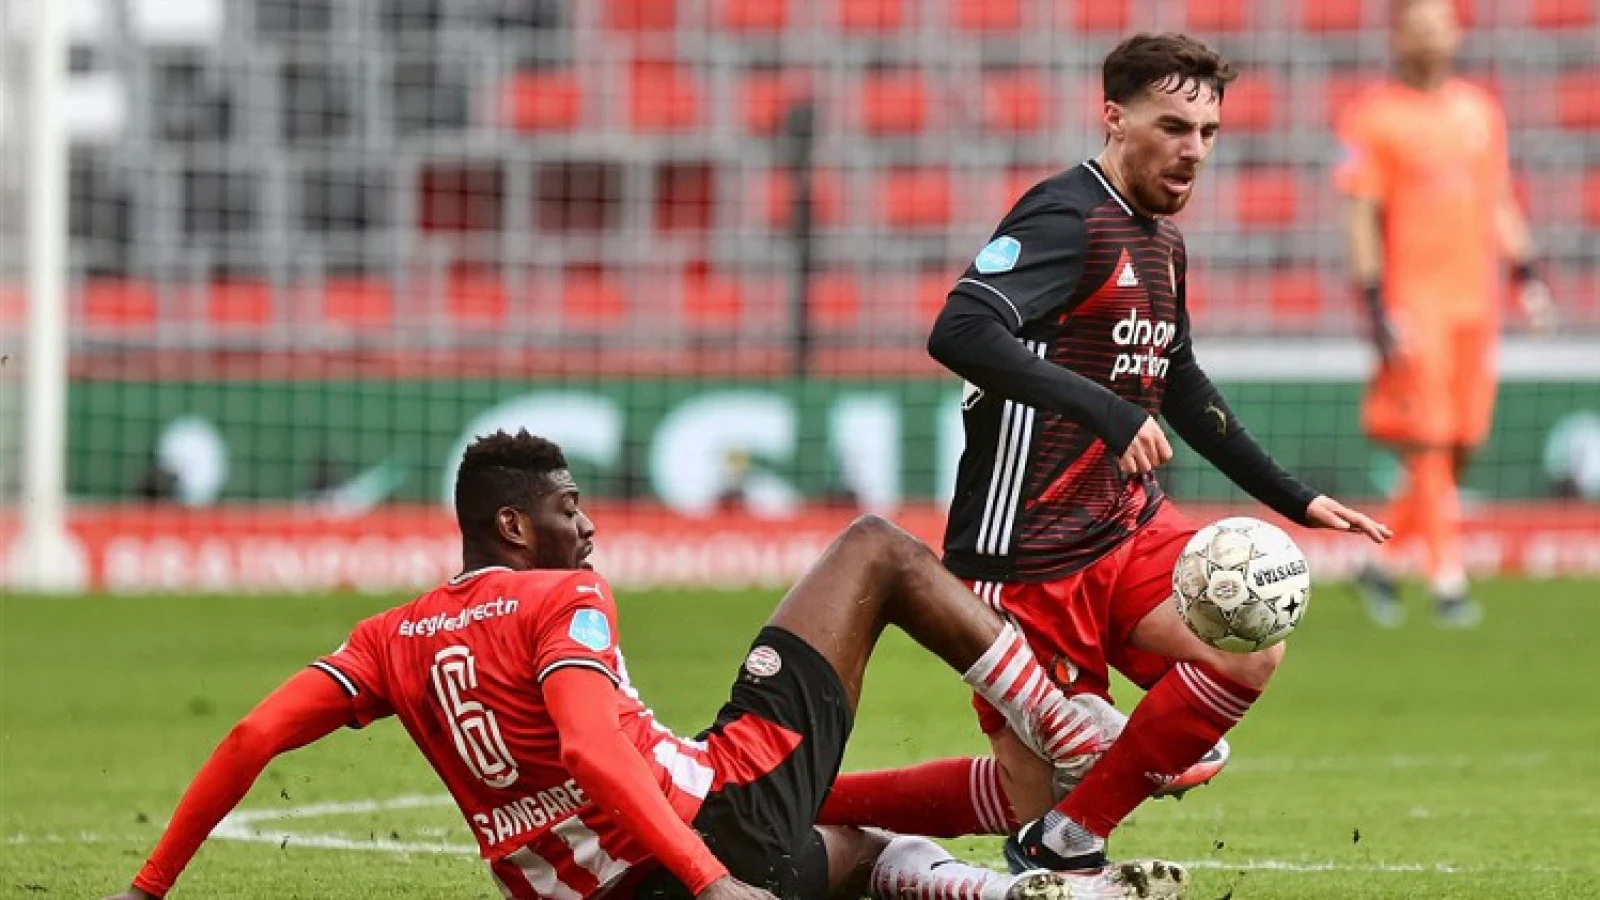 Spannend duel tussen Feyenoord en PSV eindigt onbeslist